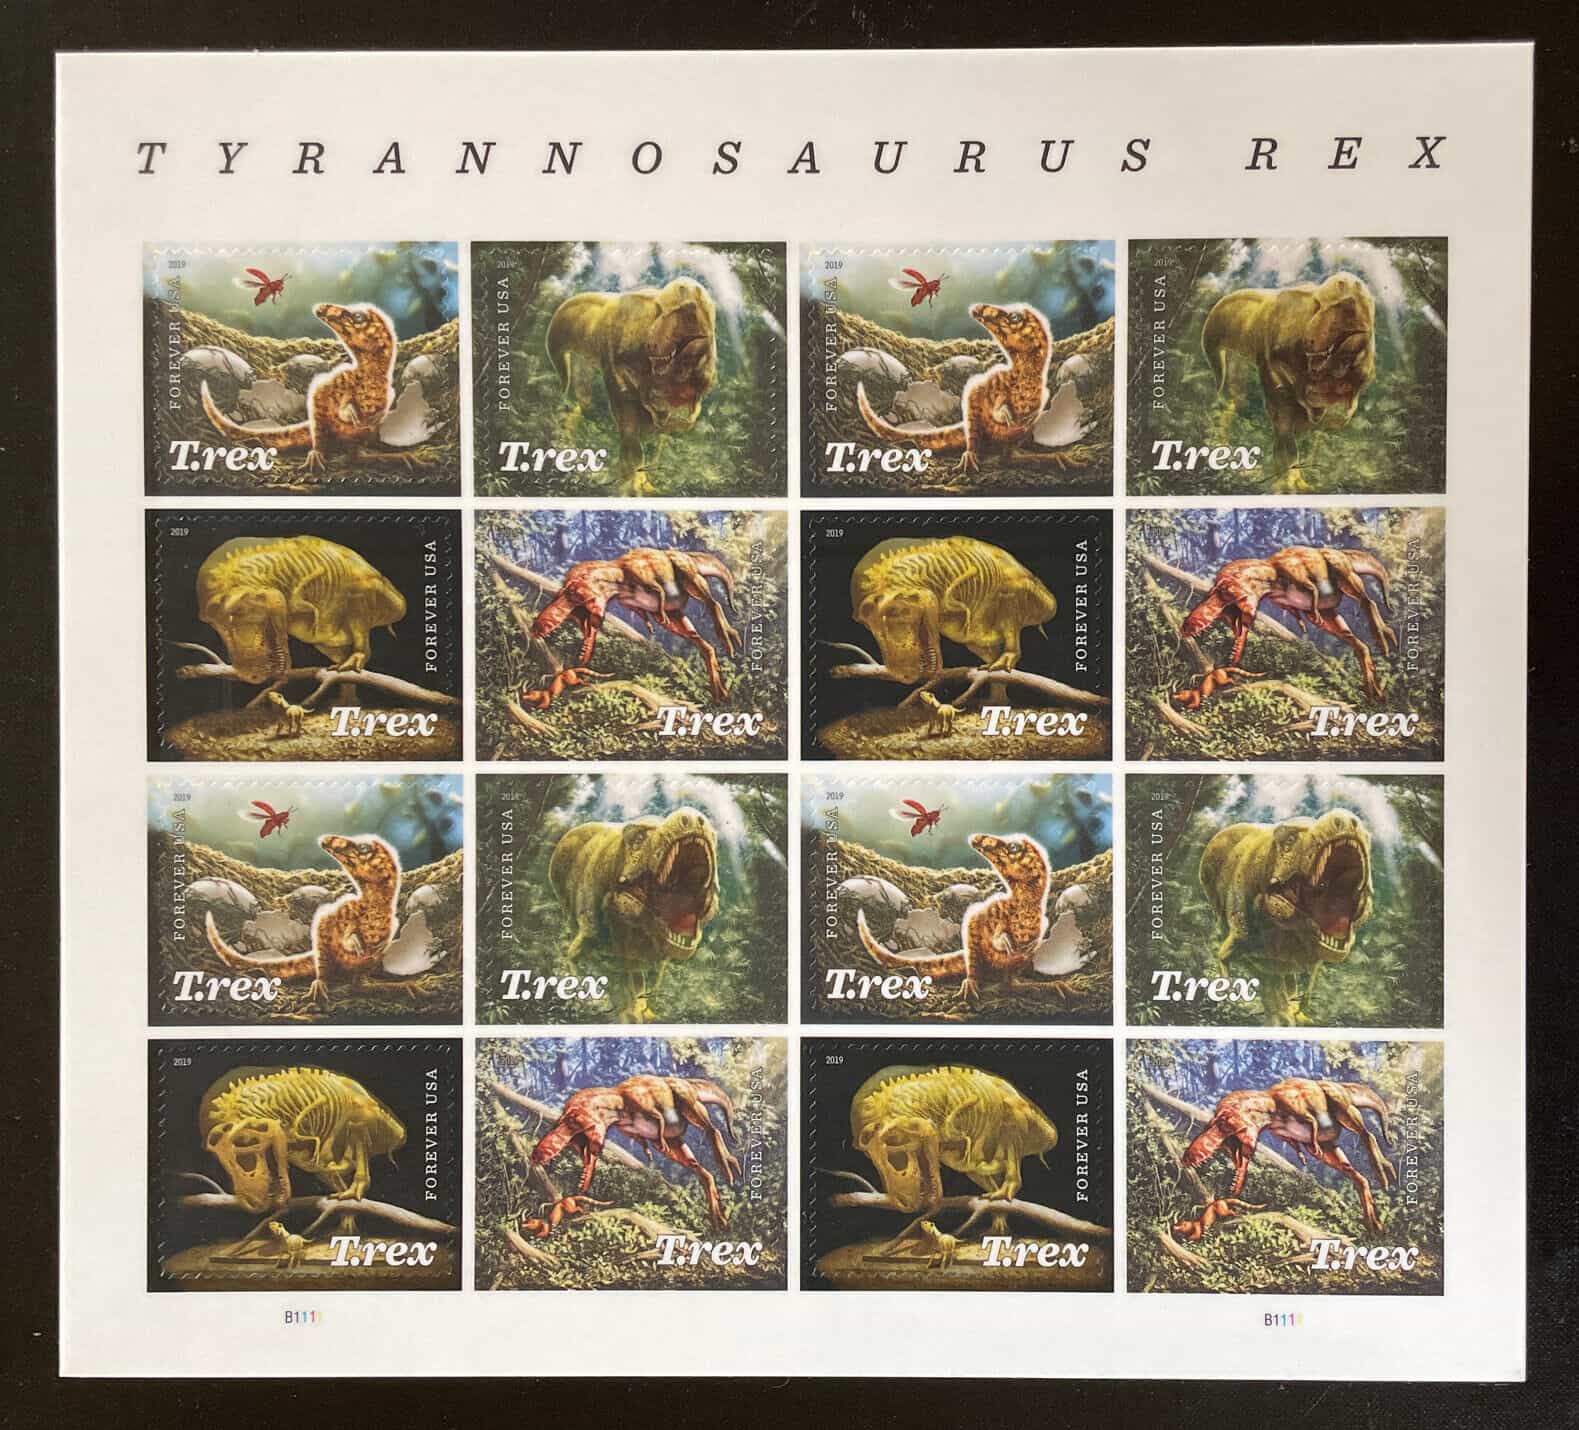 2019 Scott 5410 TYRANNOSAURUS REX Pane of 16 US Forever Stamps MNH